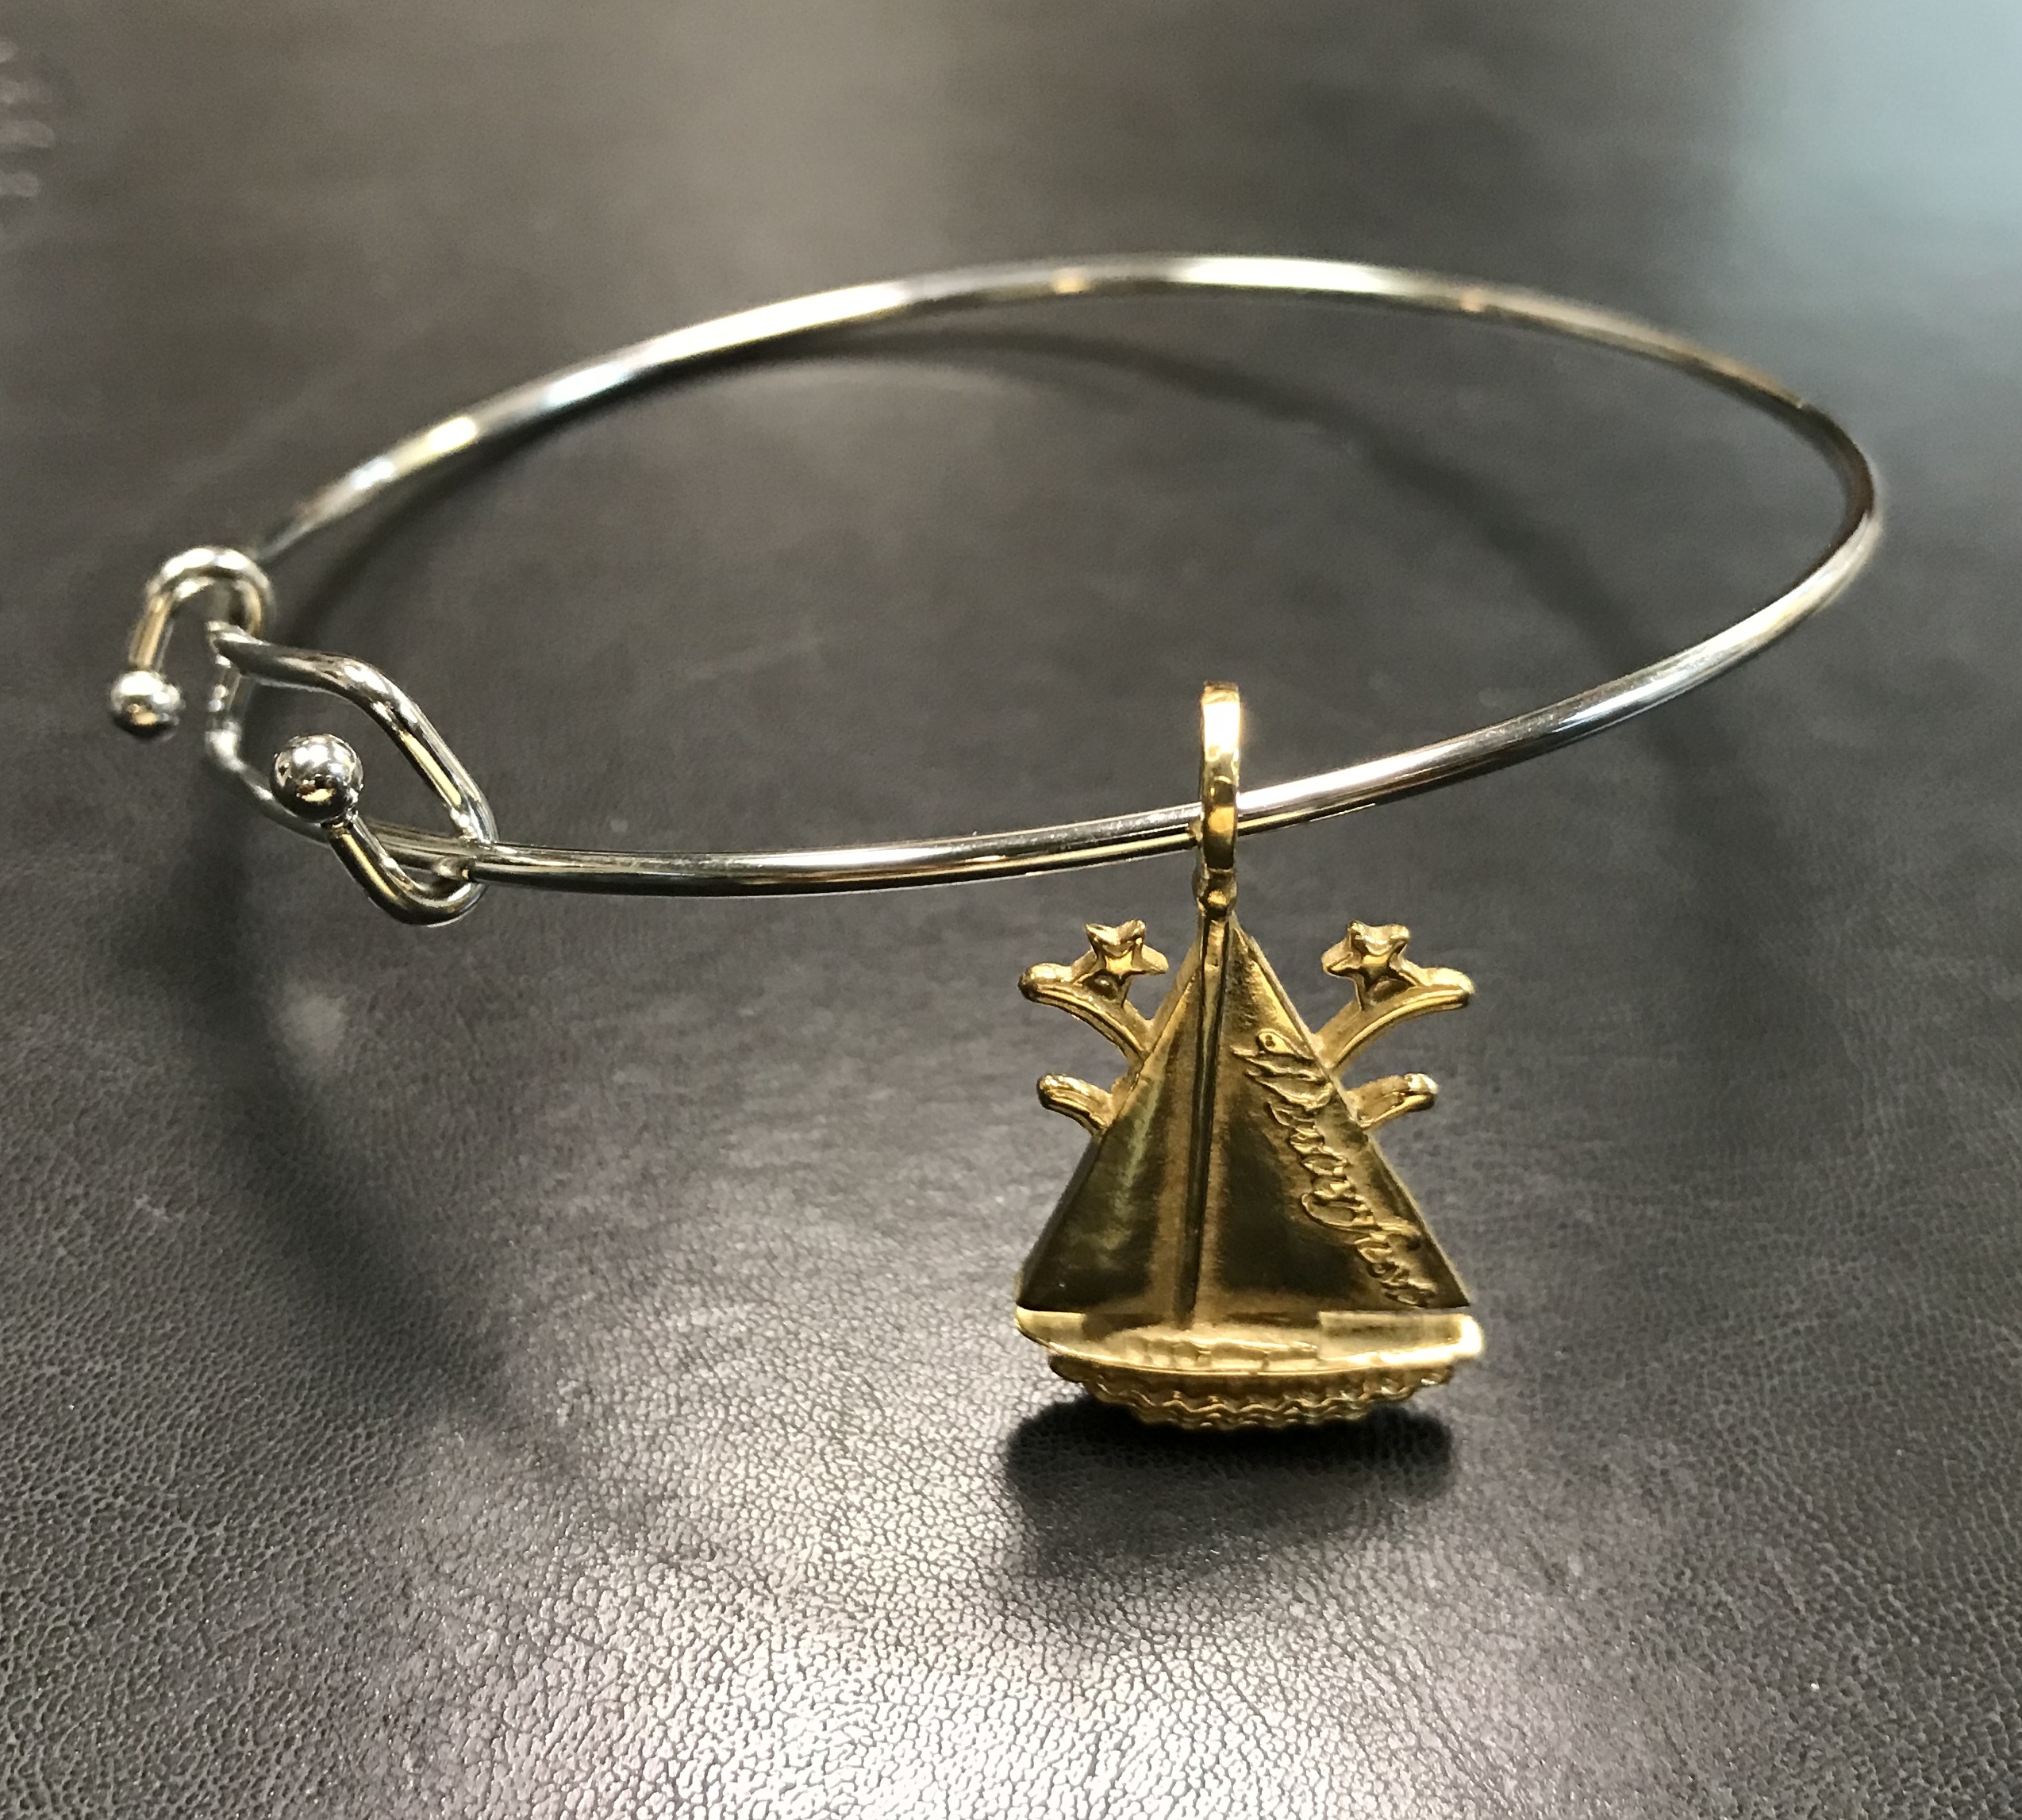 The Winterfest Boat Bracelet in Gold color